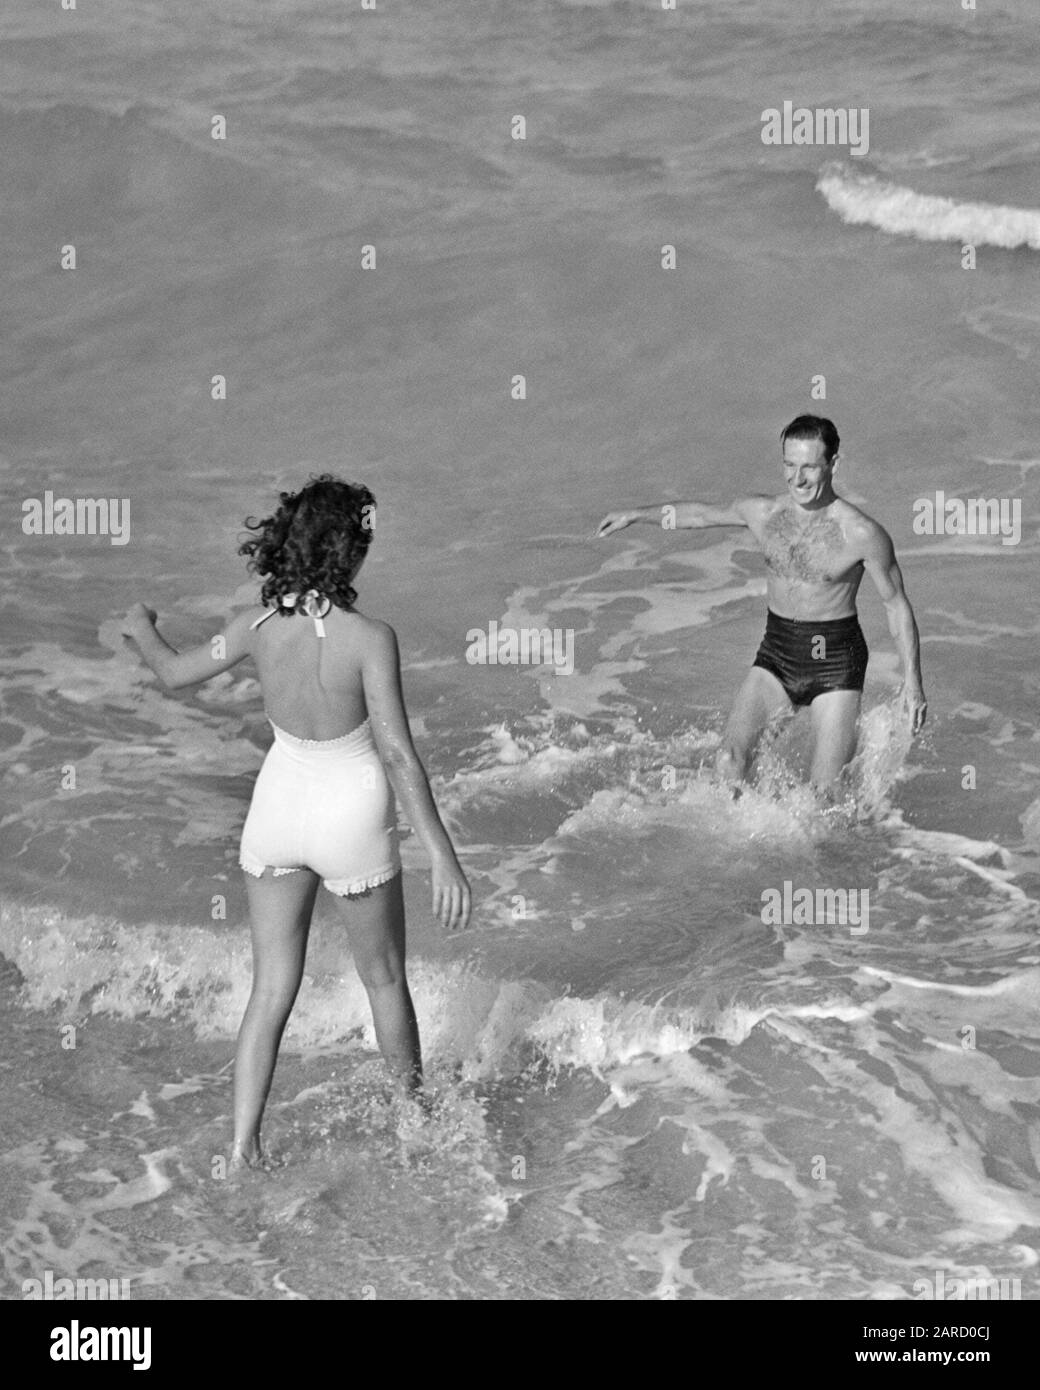 Women Beach Bathing Suit Humor Linen Postcard